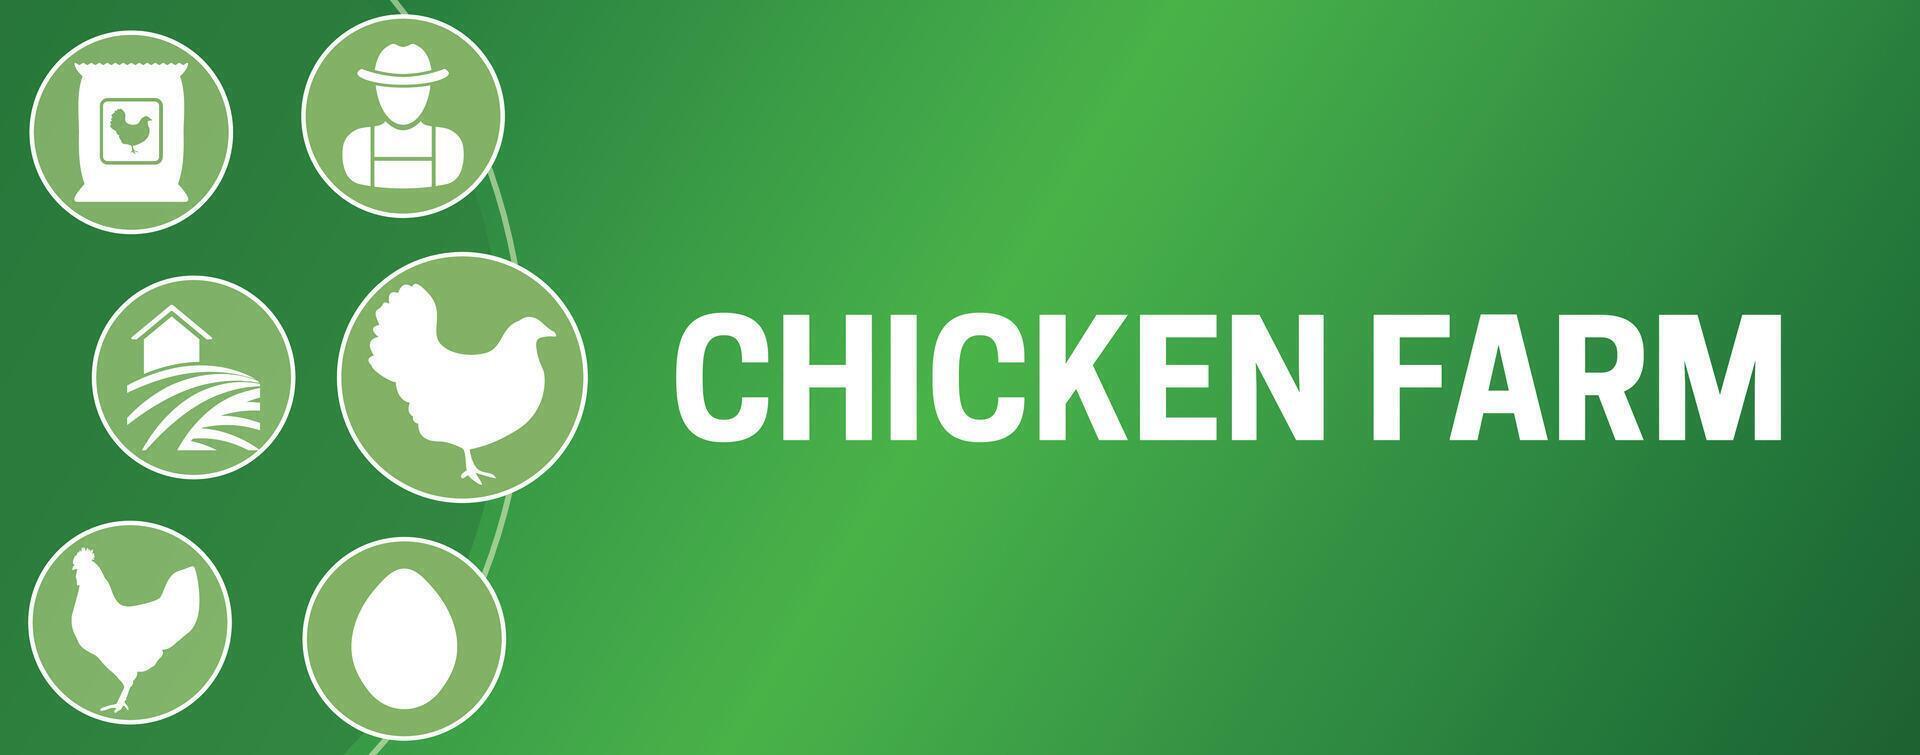 Chicken Farm Illustration Background vector